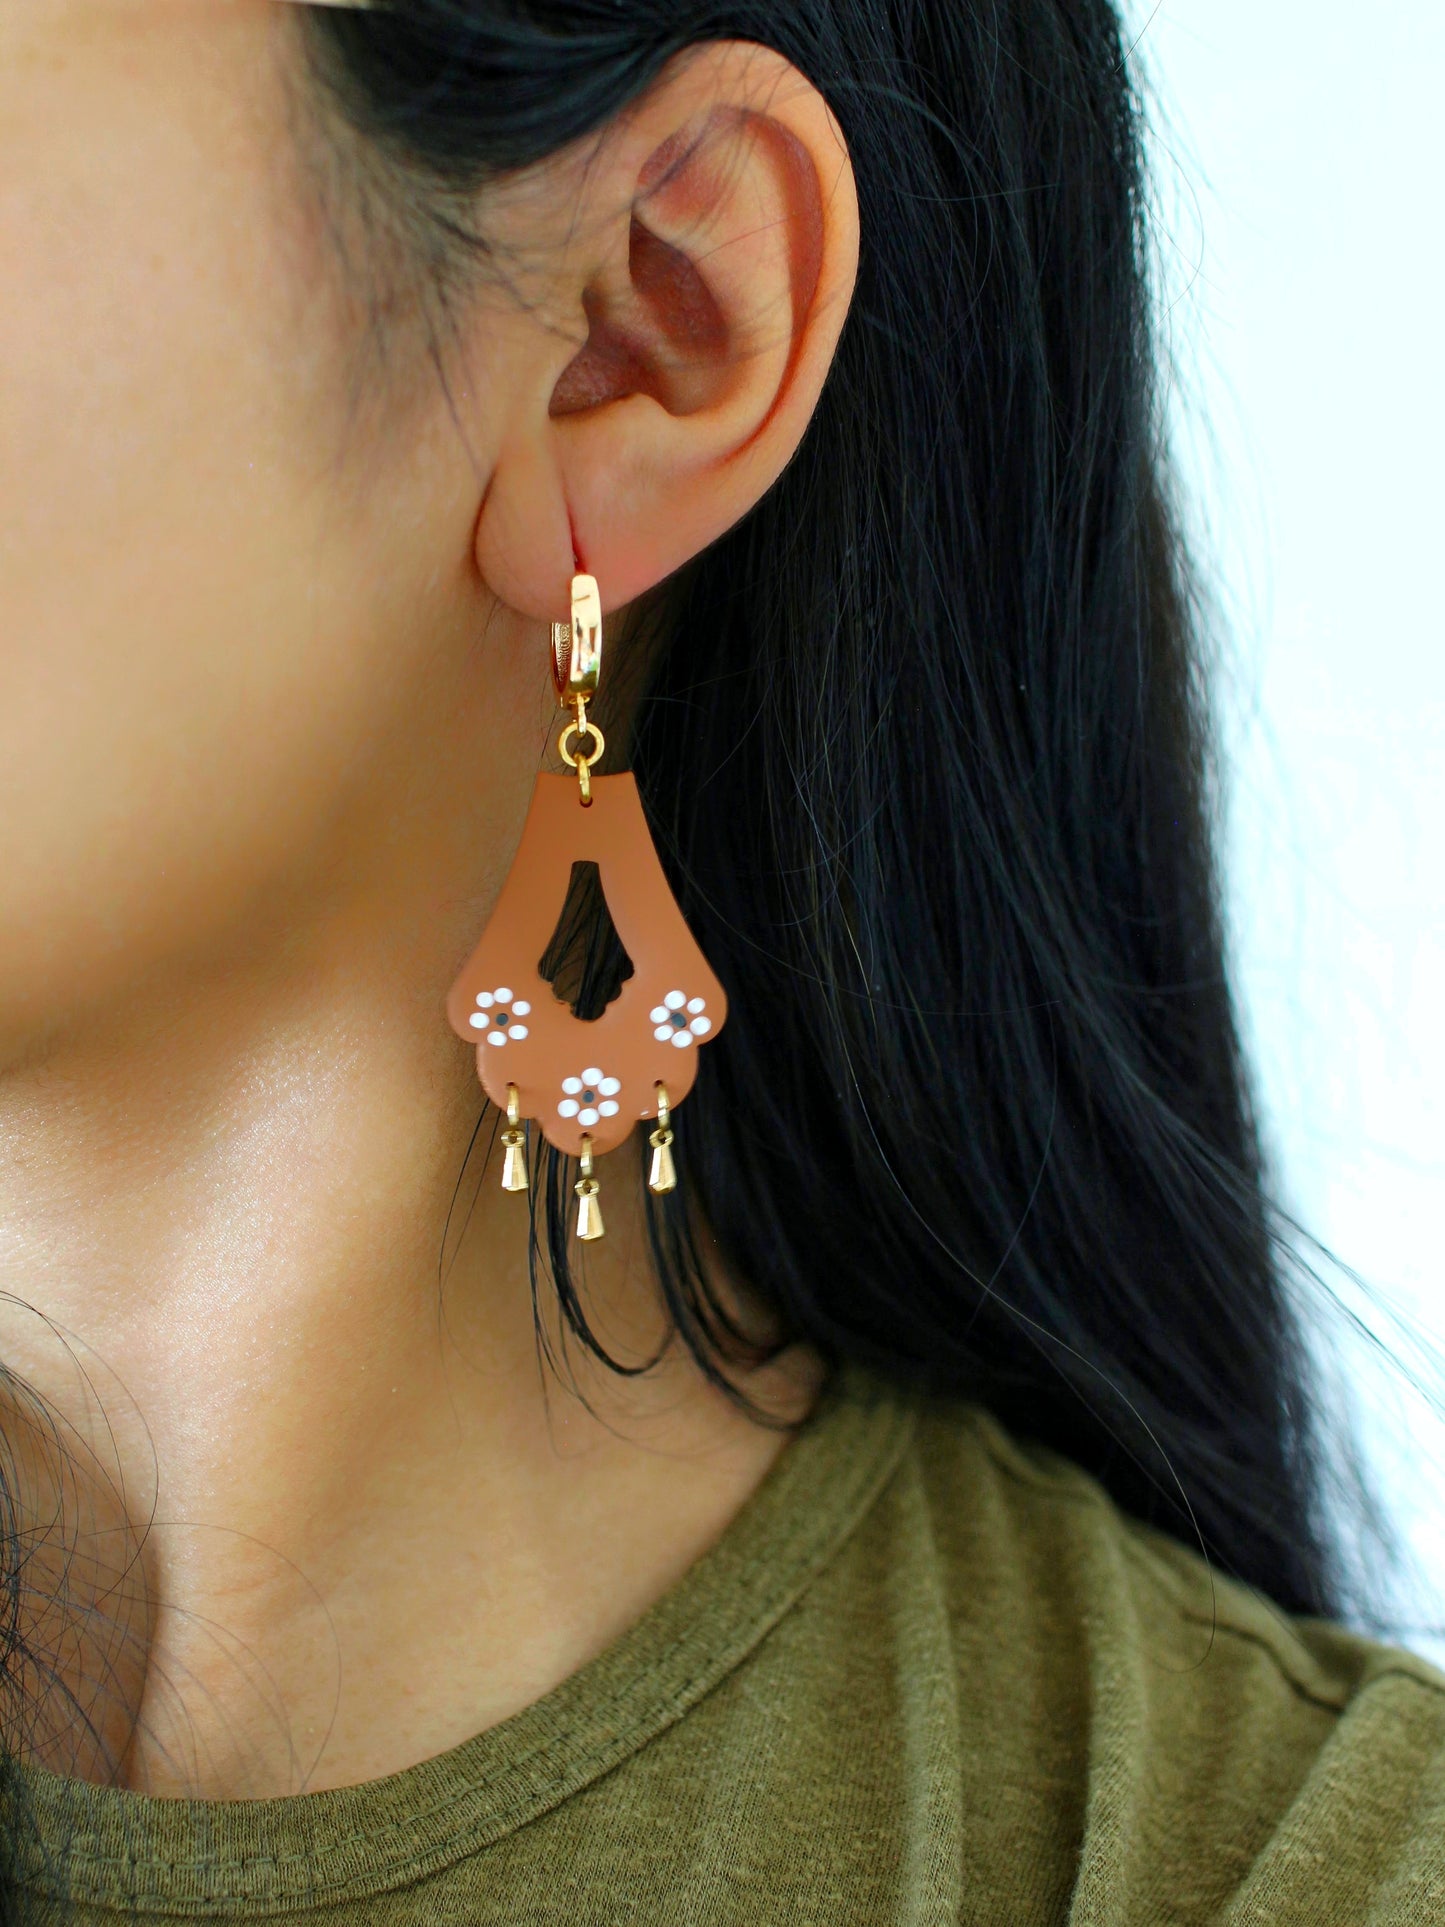 Flora - Mexican Terracotta (Barro) inspired Earrings